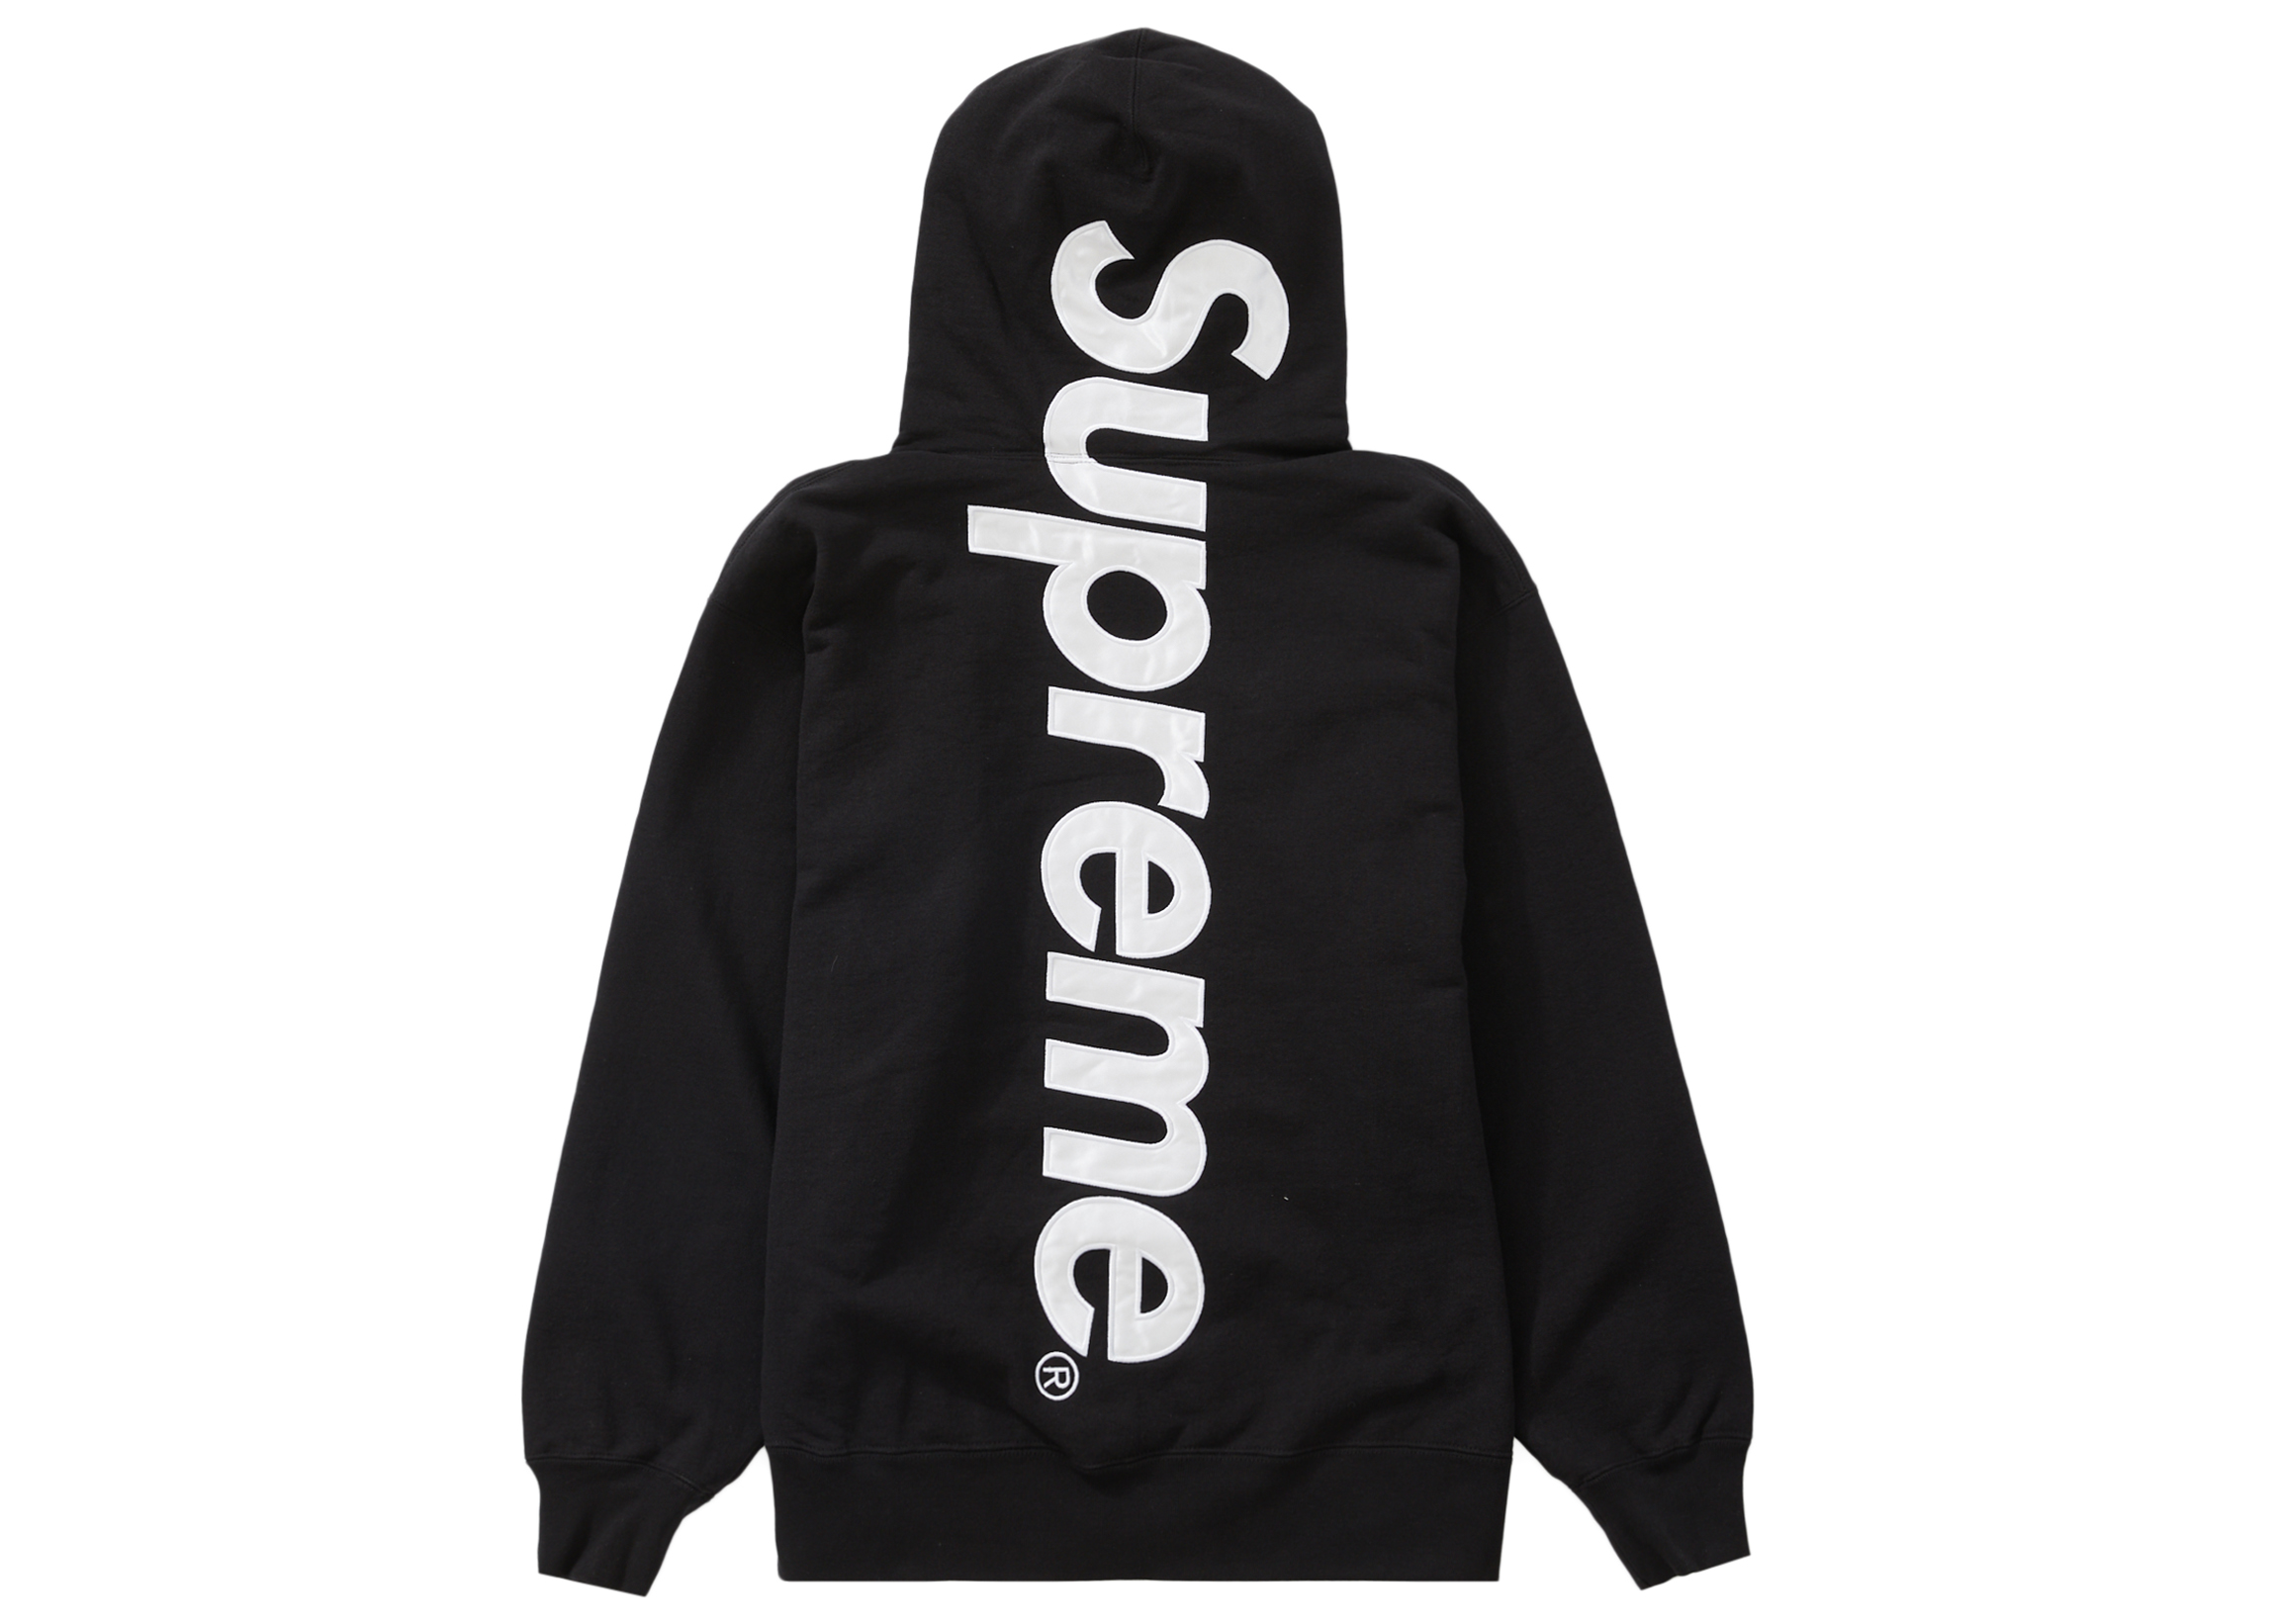 Supreme Hoodies & Sweatshirts - StockX